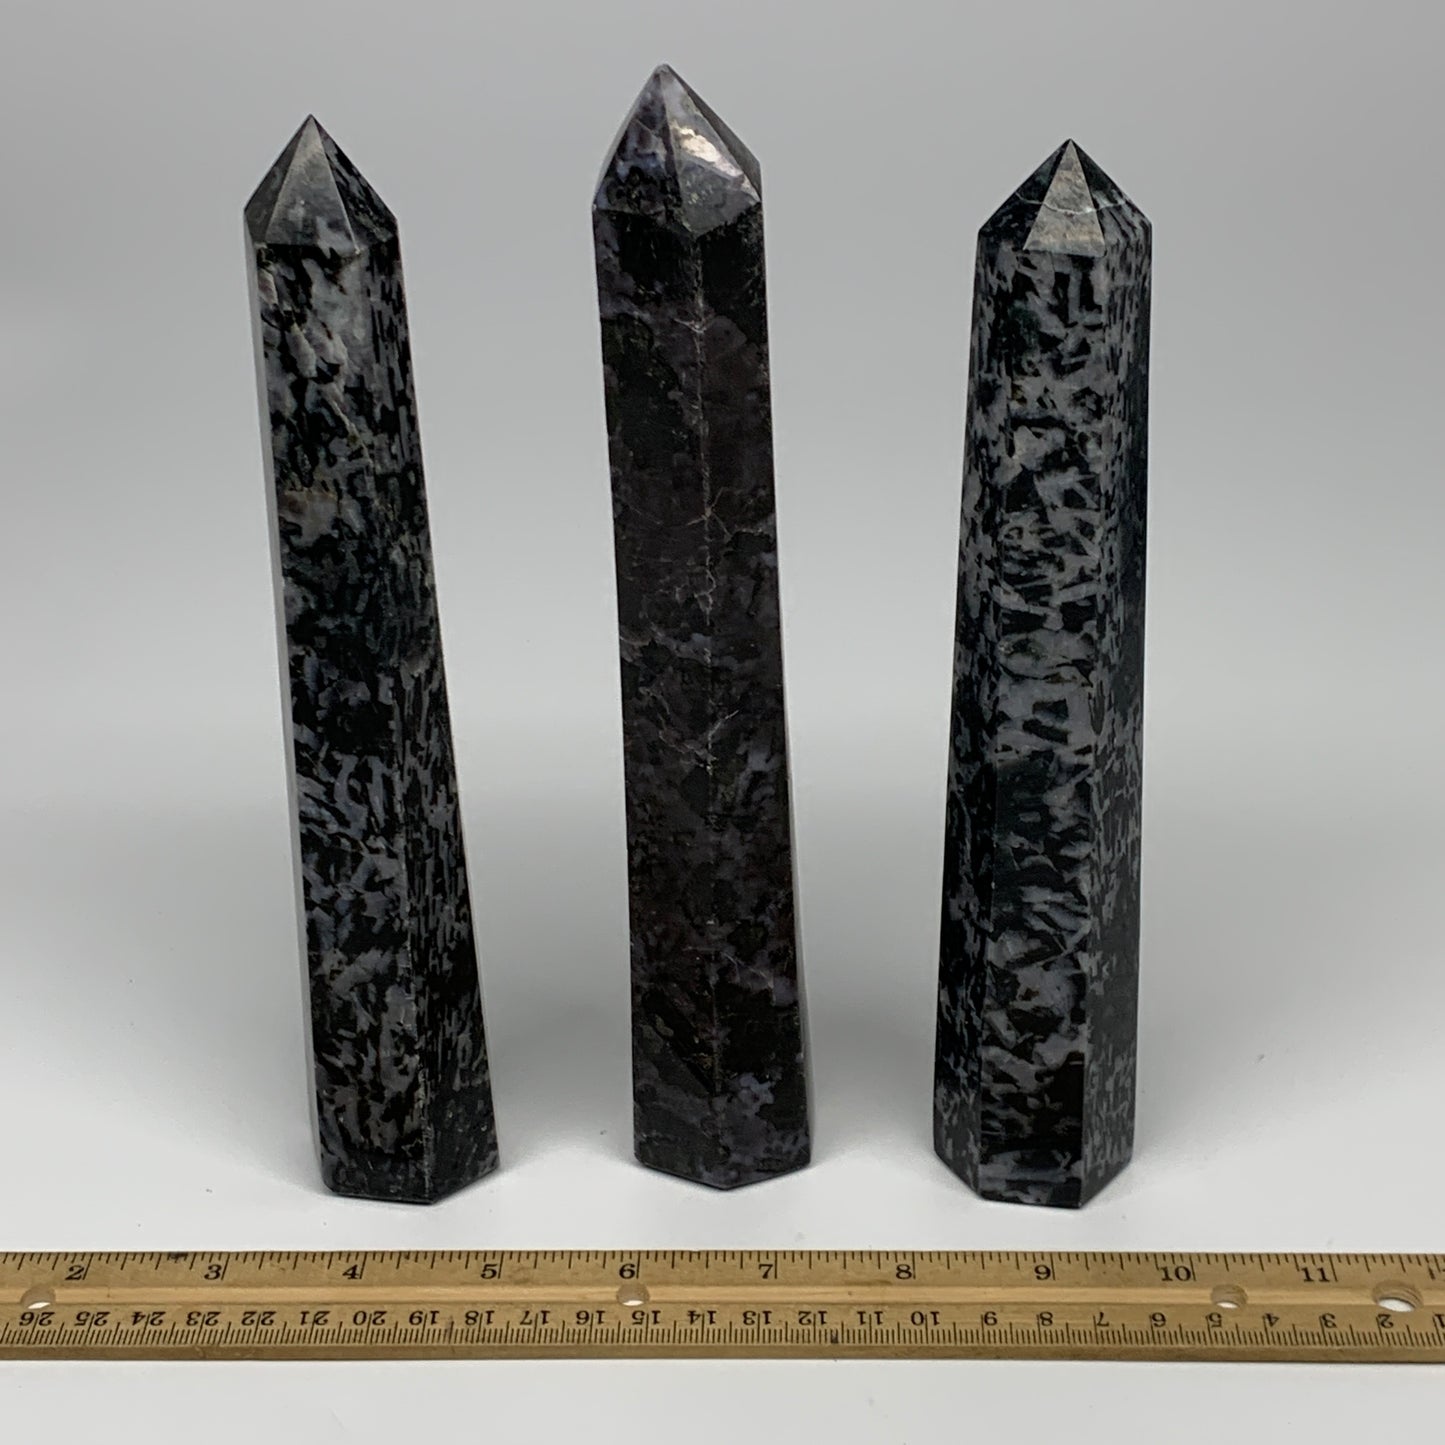 1320 grams, 8" - 8.5", 3 pcs, Indigo Gabro Merlinte Towers/Obelisks, B21445